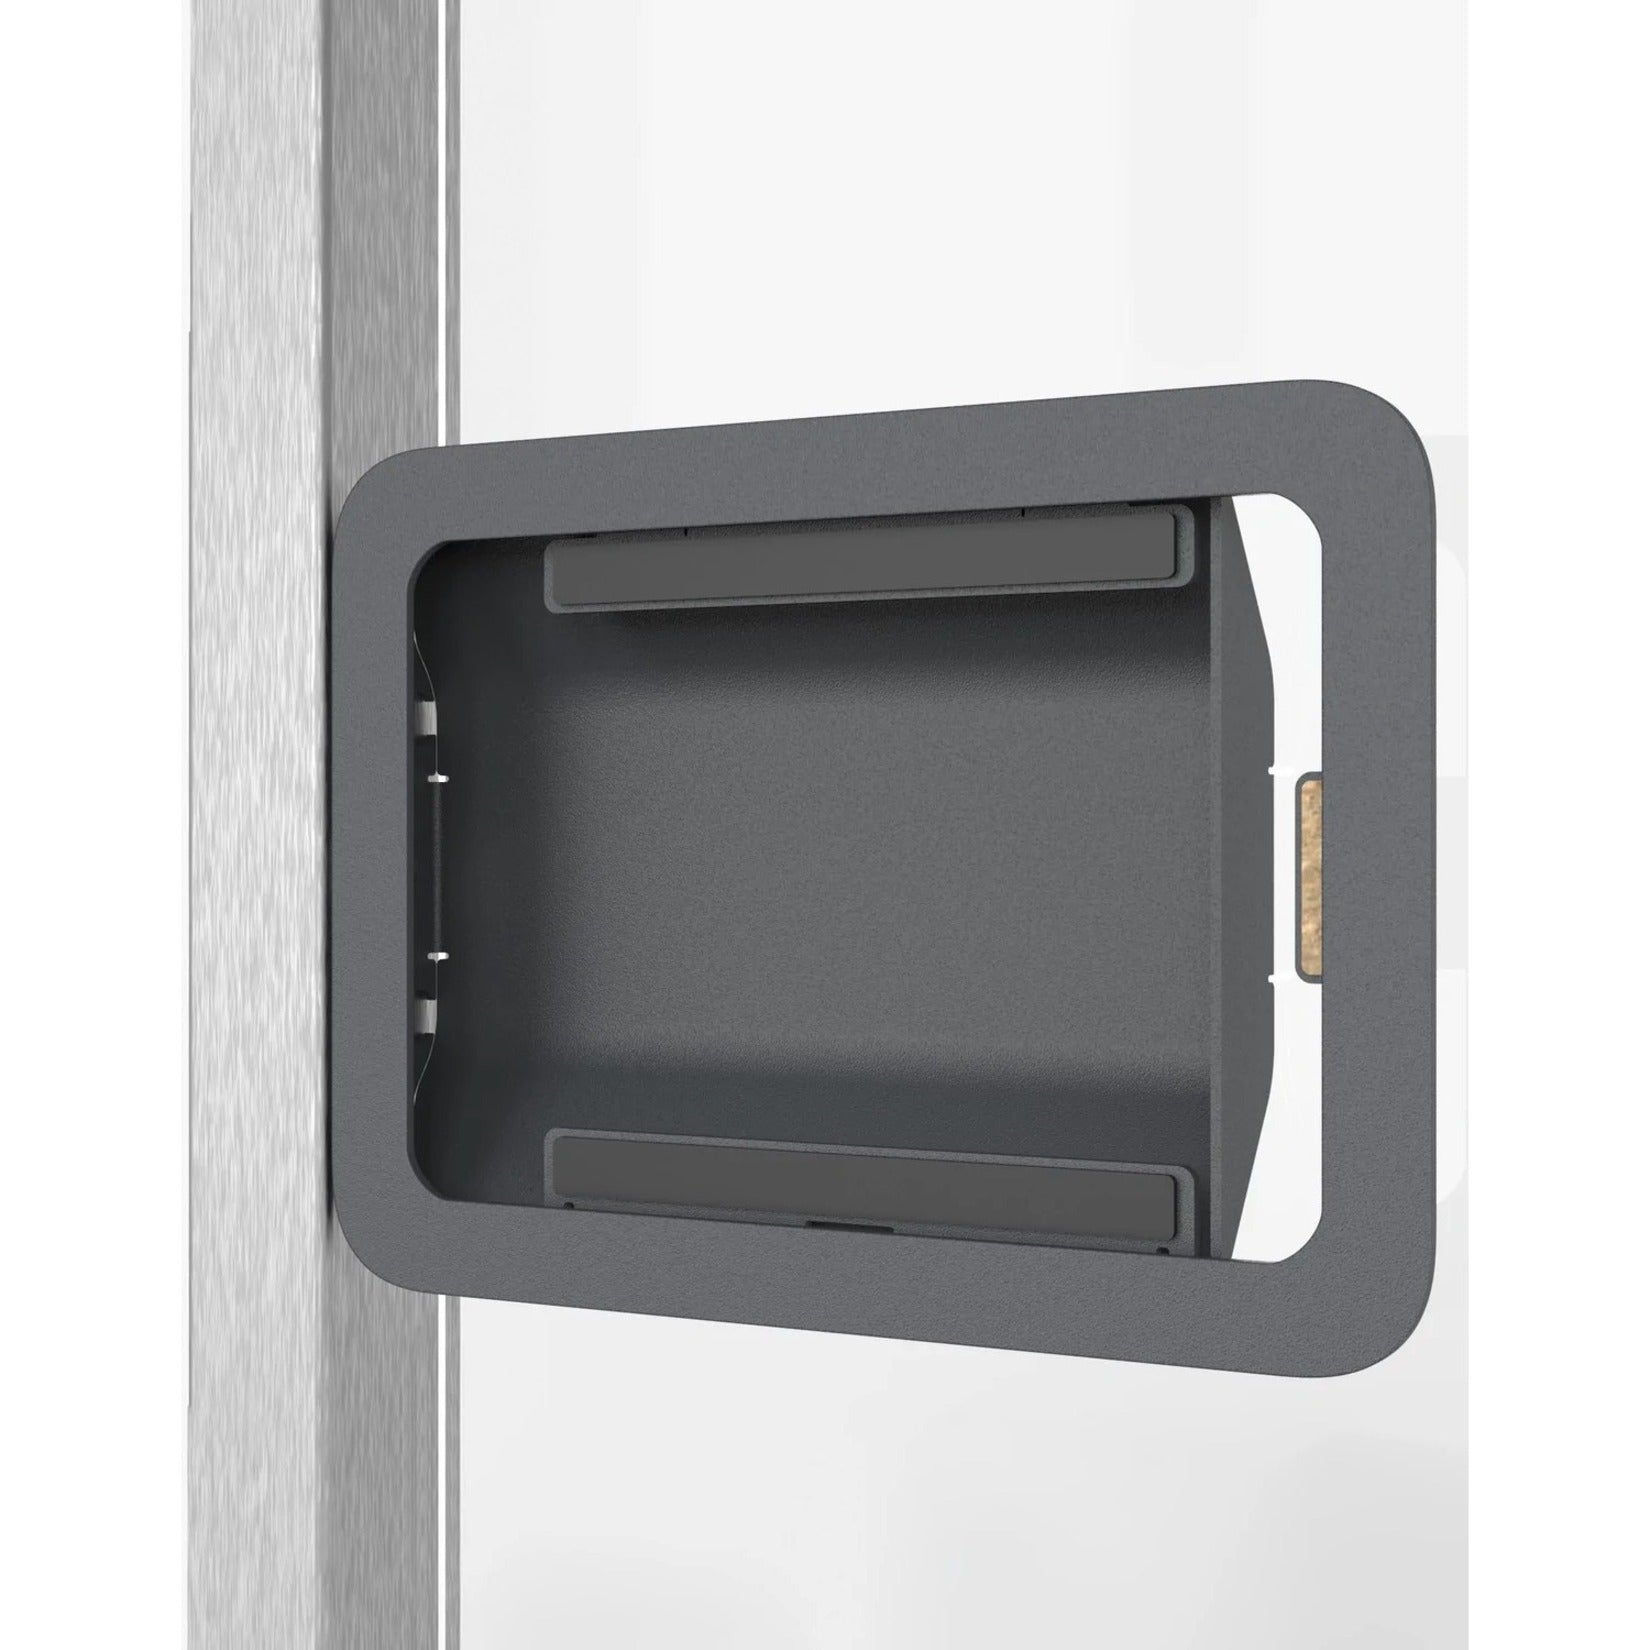 Heckler Design H659-BG Room Scheduler Mount for iPad mini 6th Generation, Heat Resistant, Rounded Edge/Corner, Vertical Adjustment